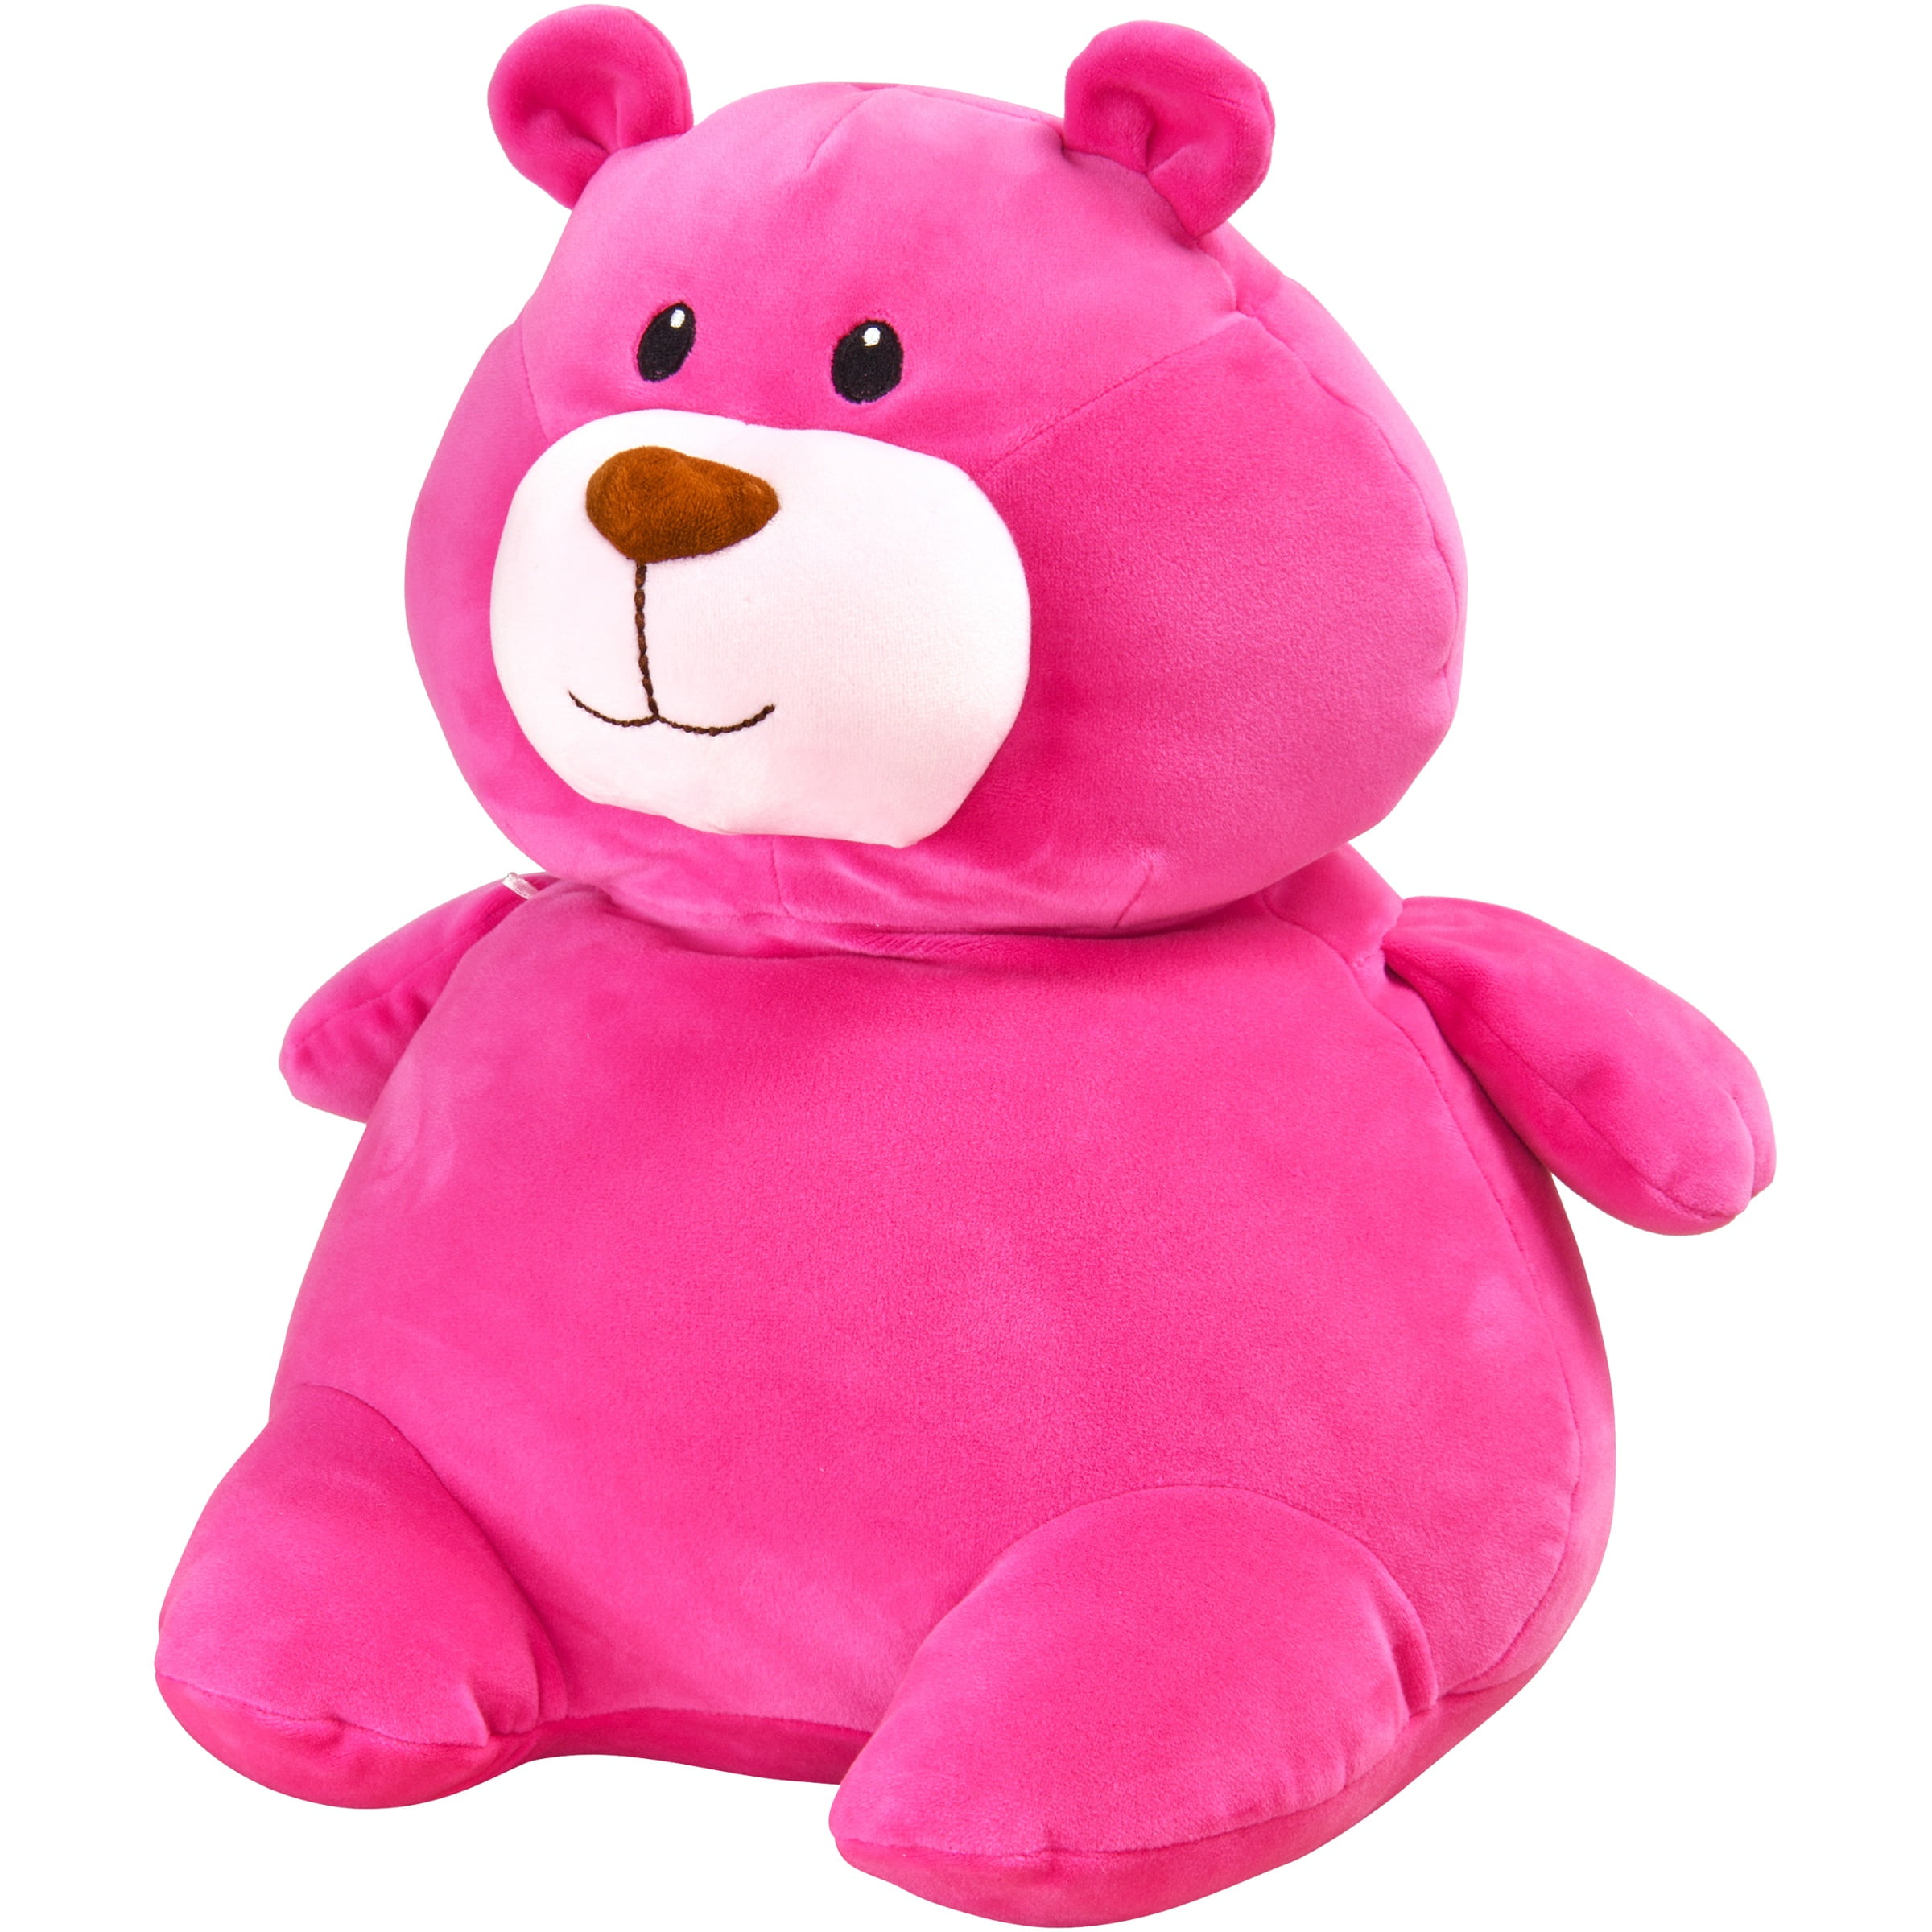 big pink teddy bear walmart